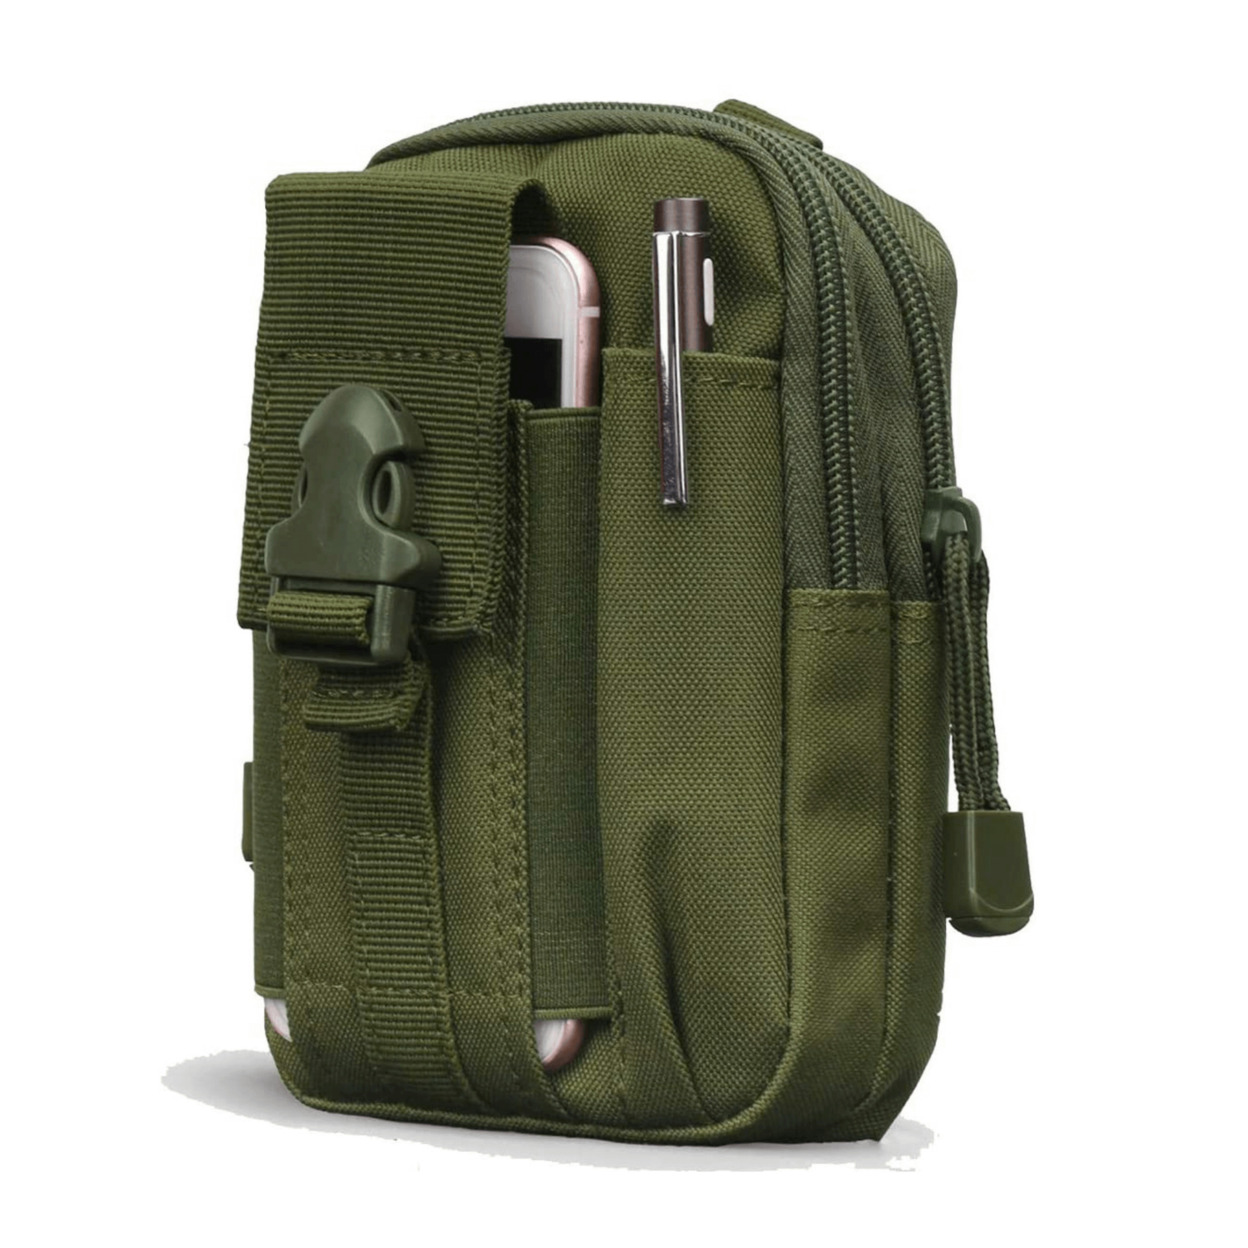 Tactical MOLLE Pouch & Waist Bag For Hiking & Outdoor Activities - Desert